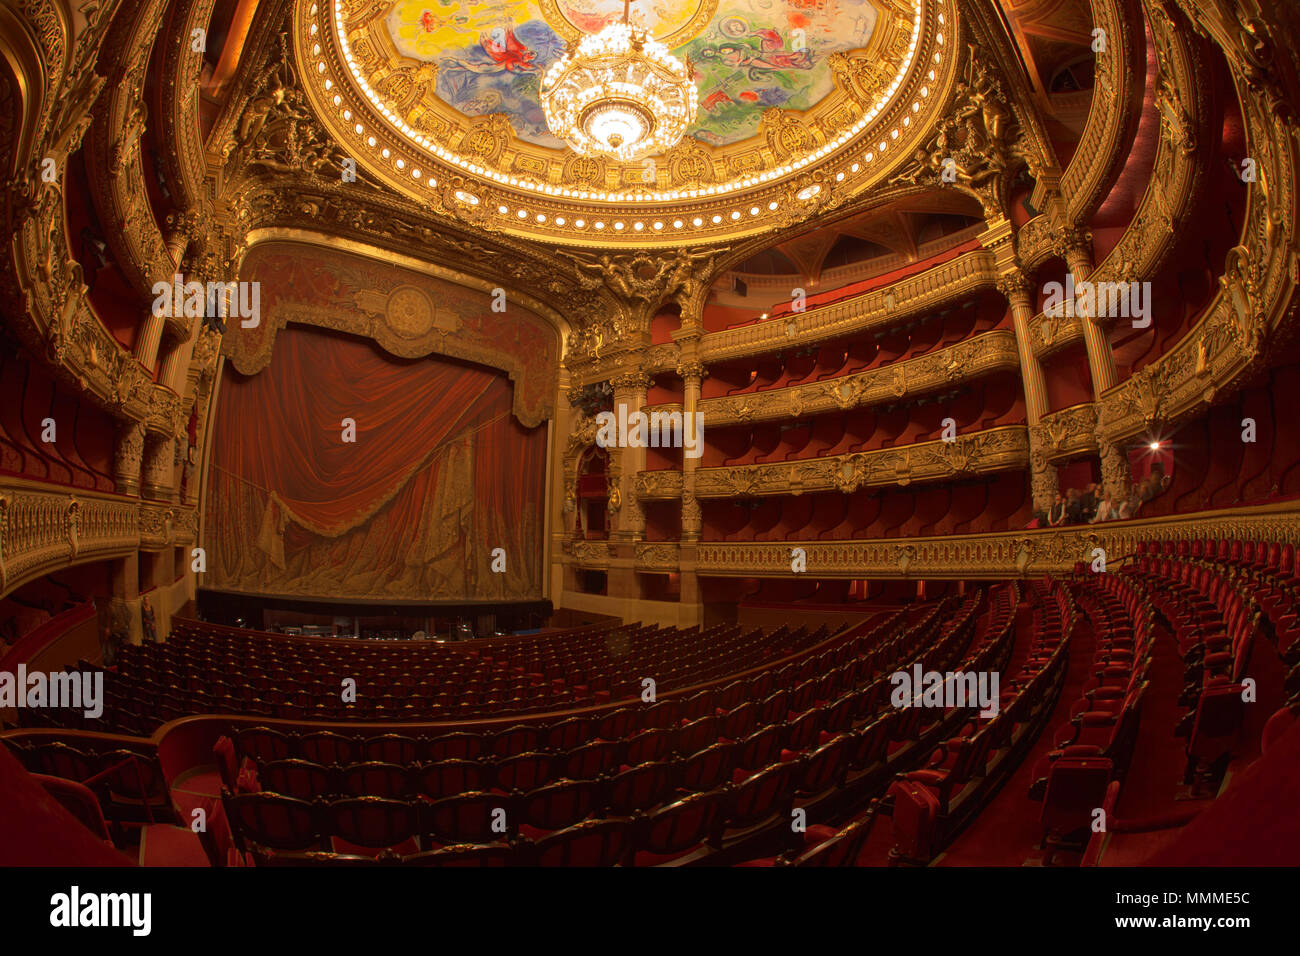 Paris, France - October, 2017: Auditorium inside of the Palais Garnier Opera Garnier in Paris, France. The seven-ton bronze and crystal chandelier was designed by Garnier. Stock Photo